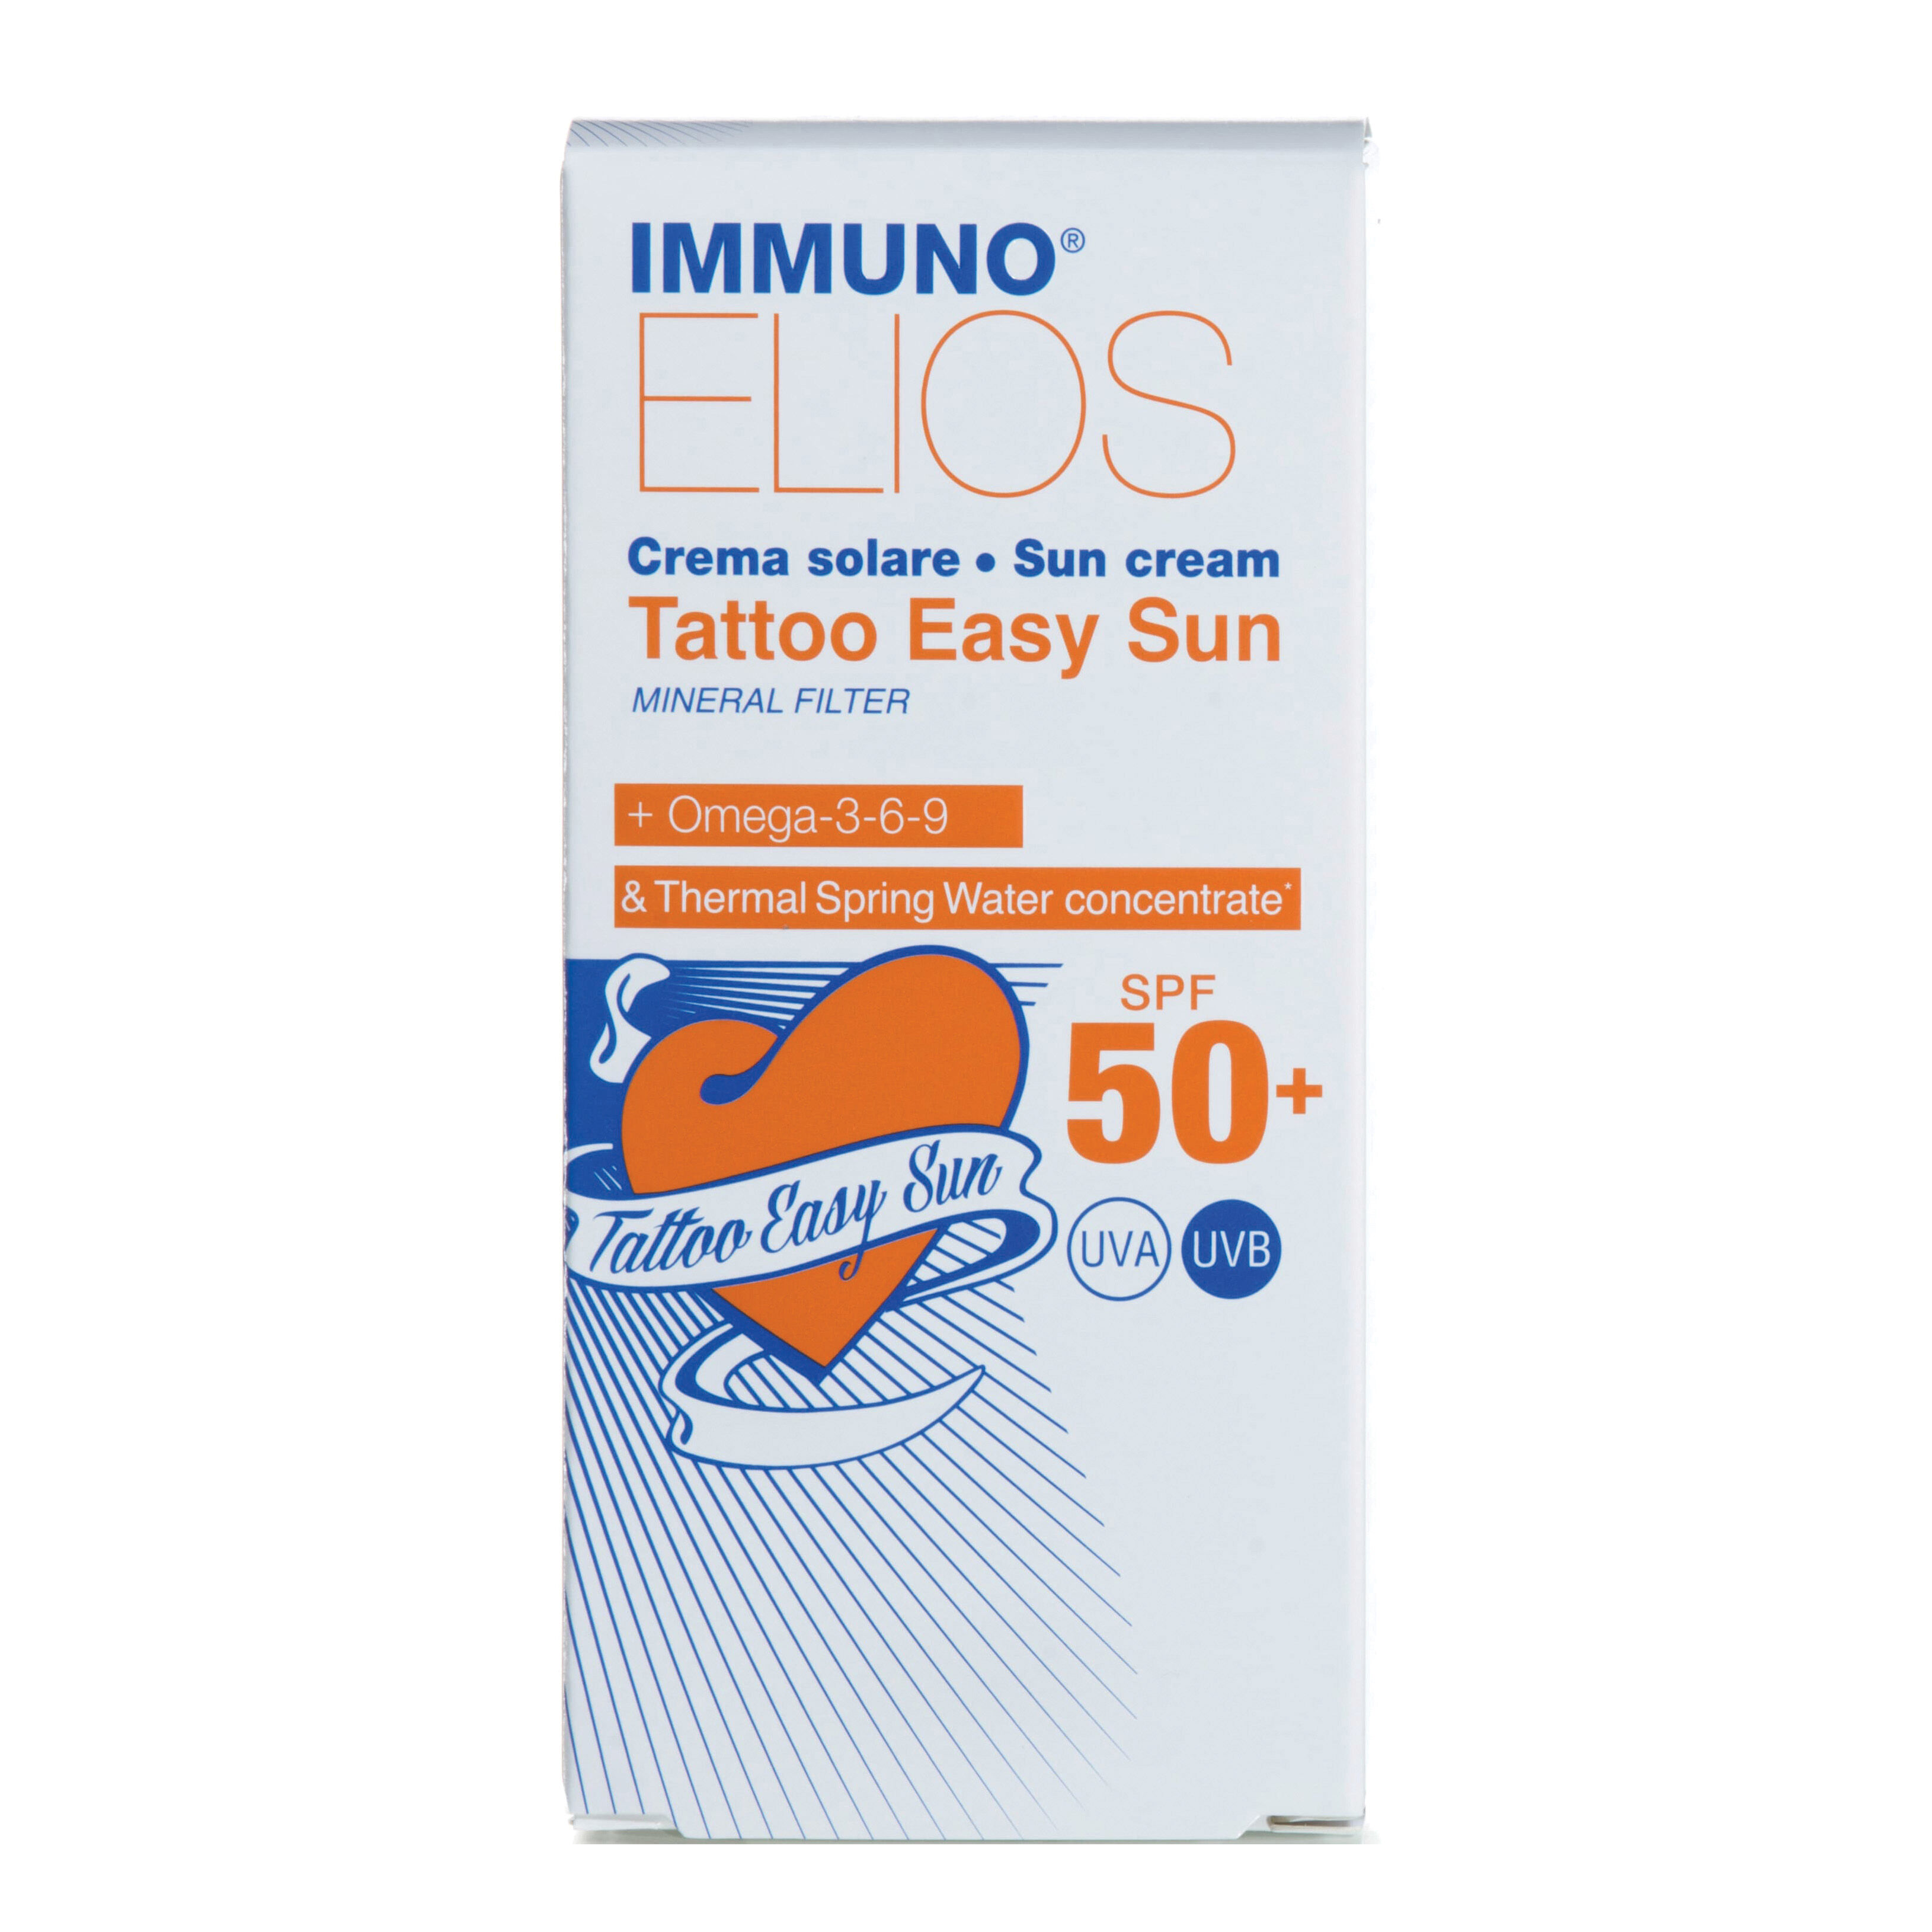 morgan immuno elios easy sun tattoo